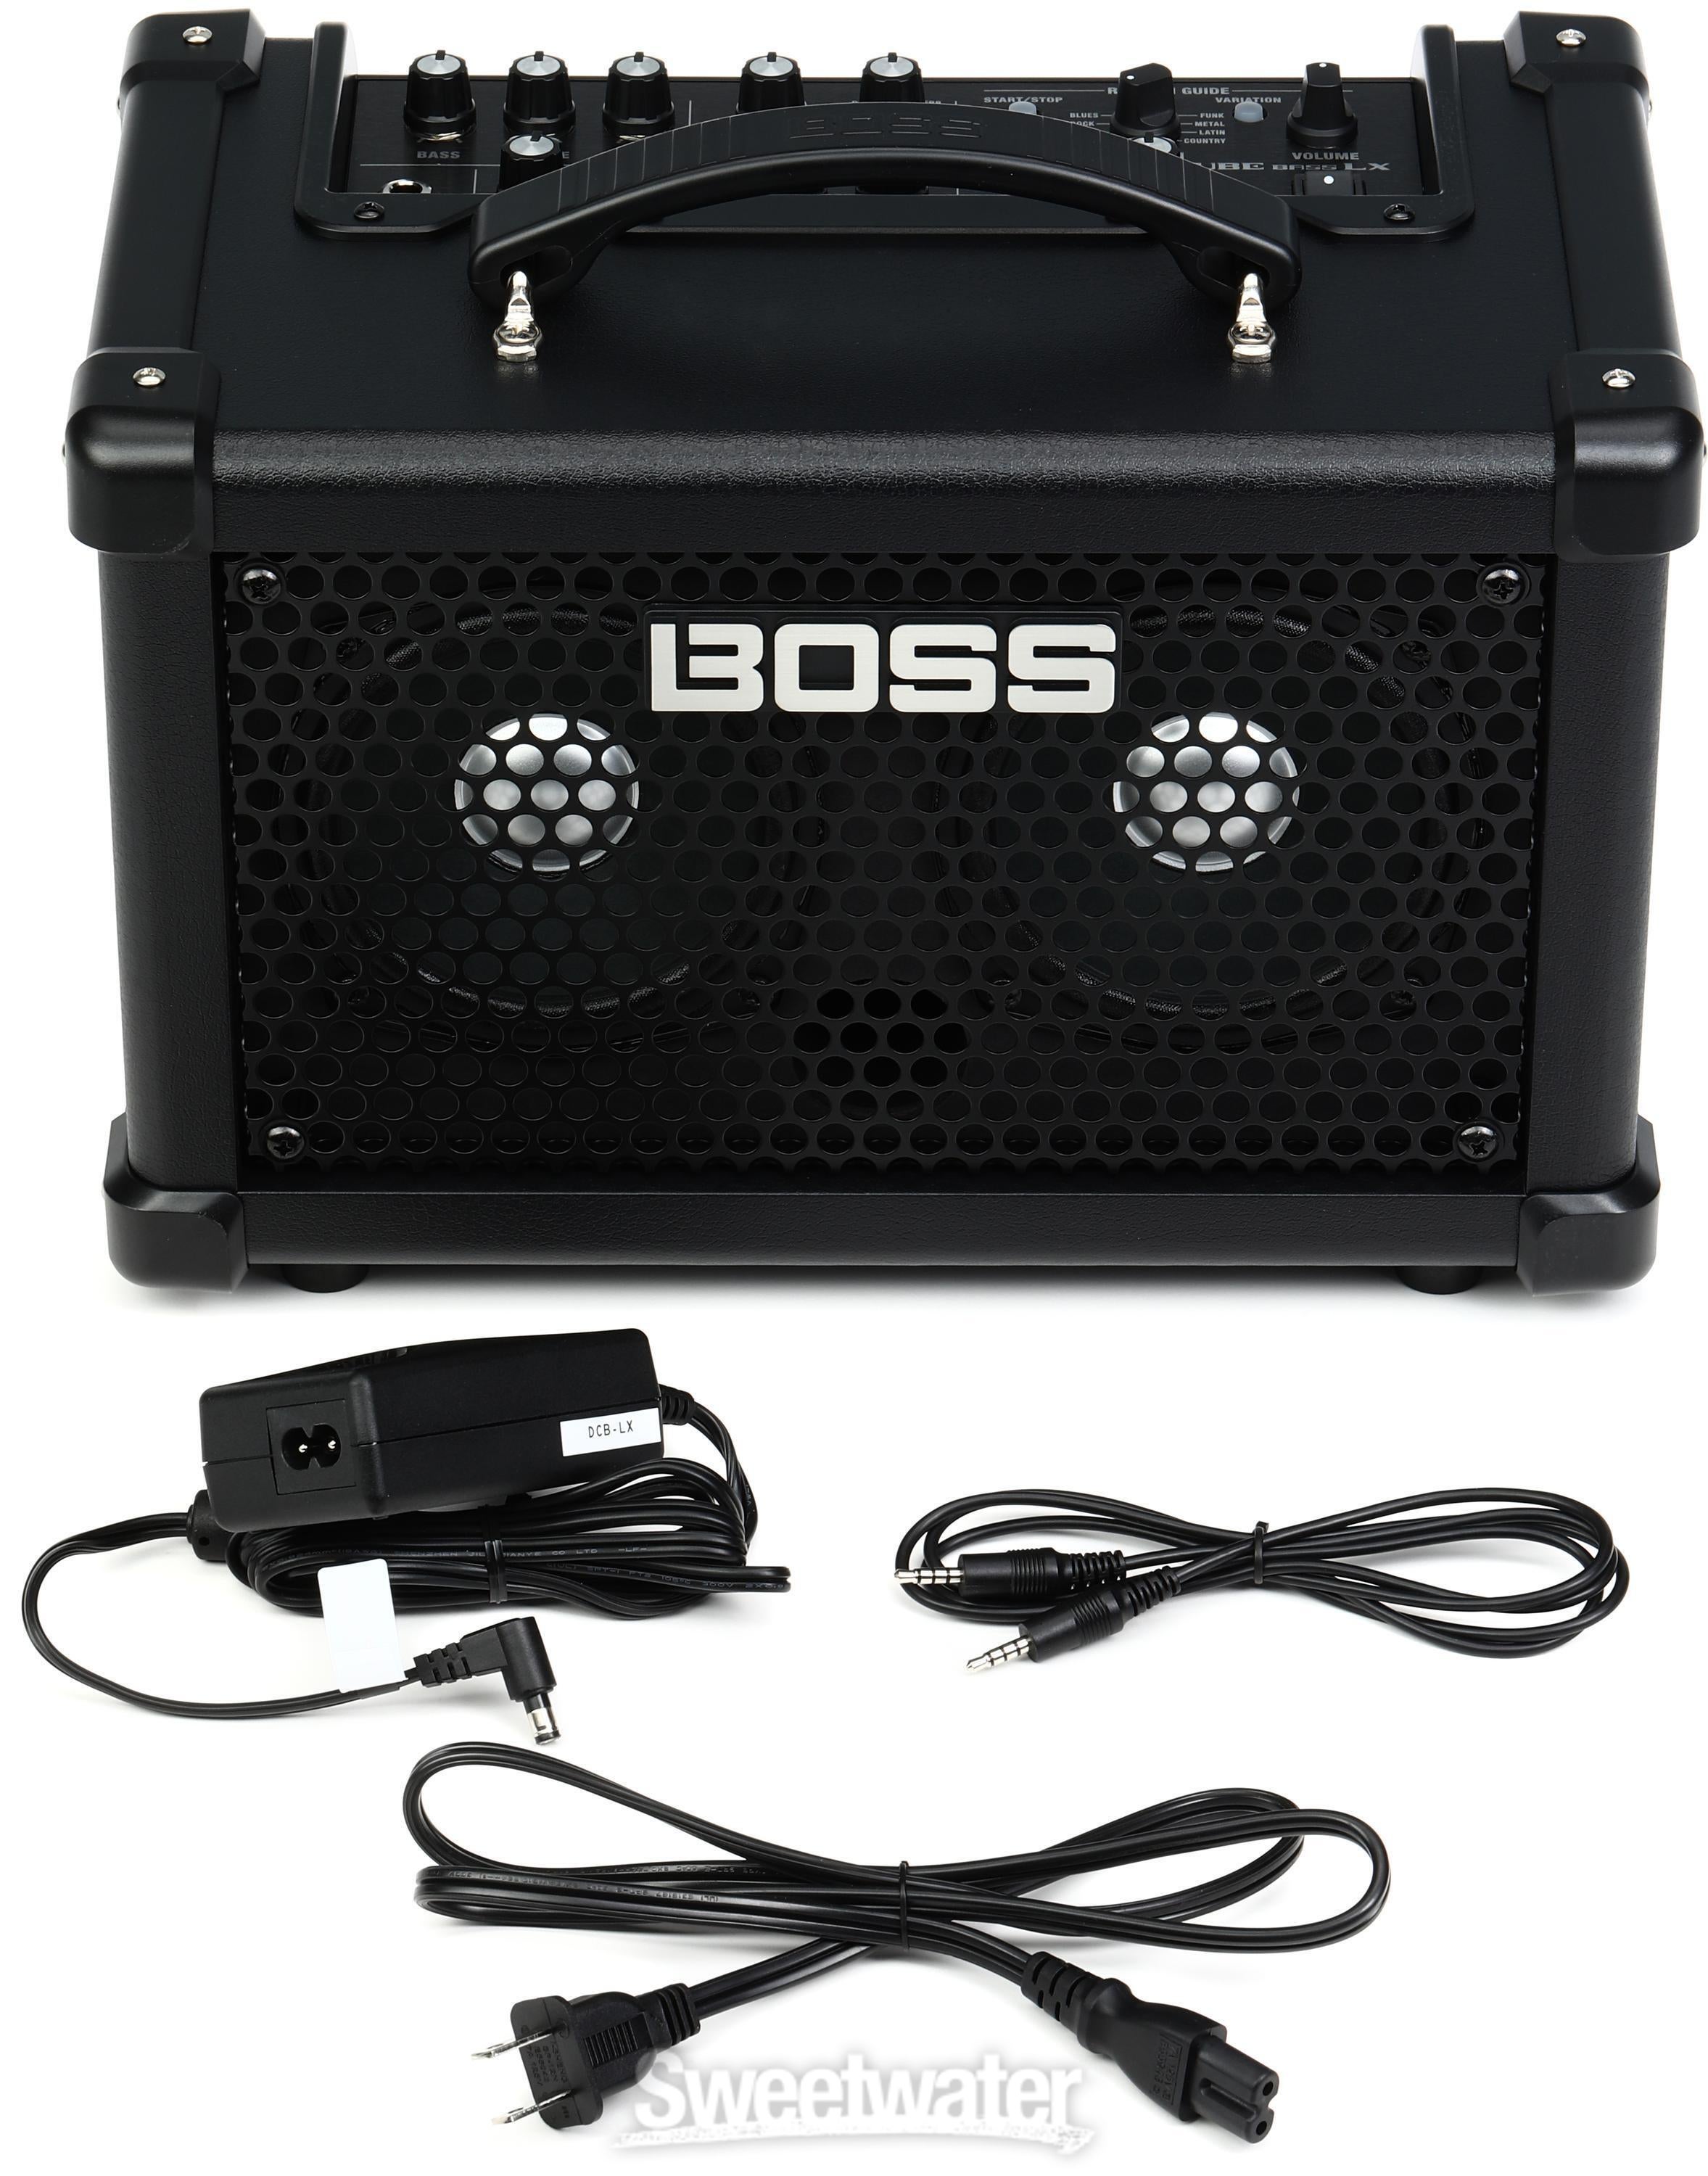 Cube　Amp　Portable　10-watt　LX　Bass　x　Dual　Combo　Sweetwater　Boss　5-inch